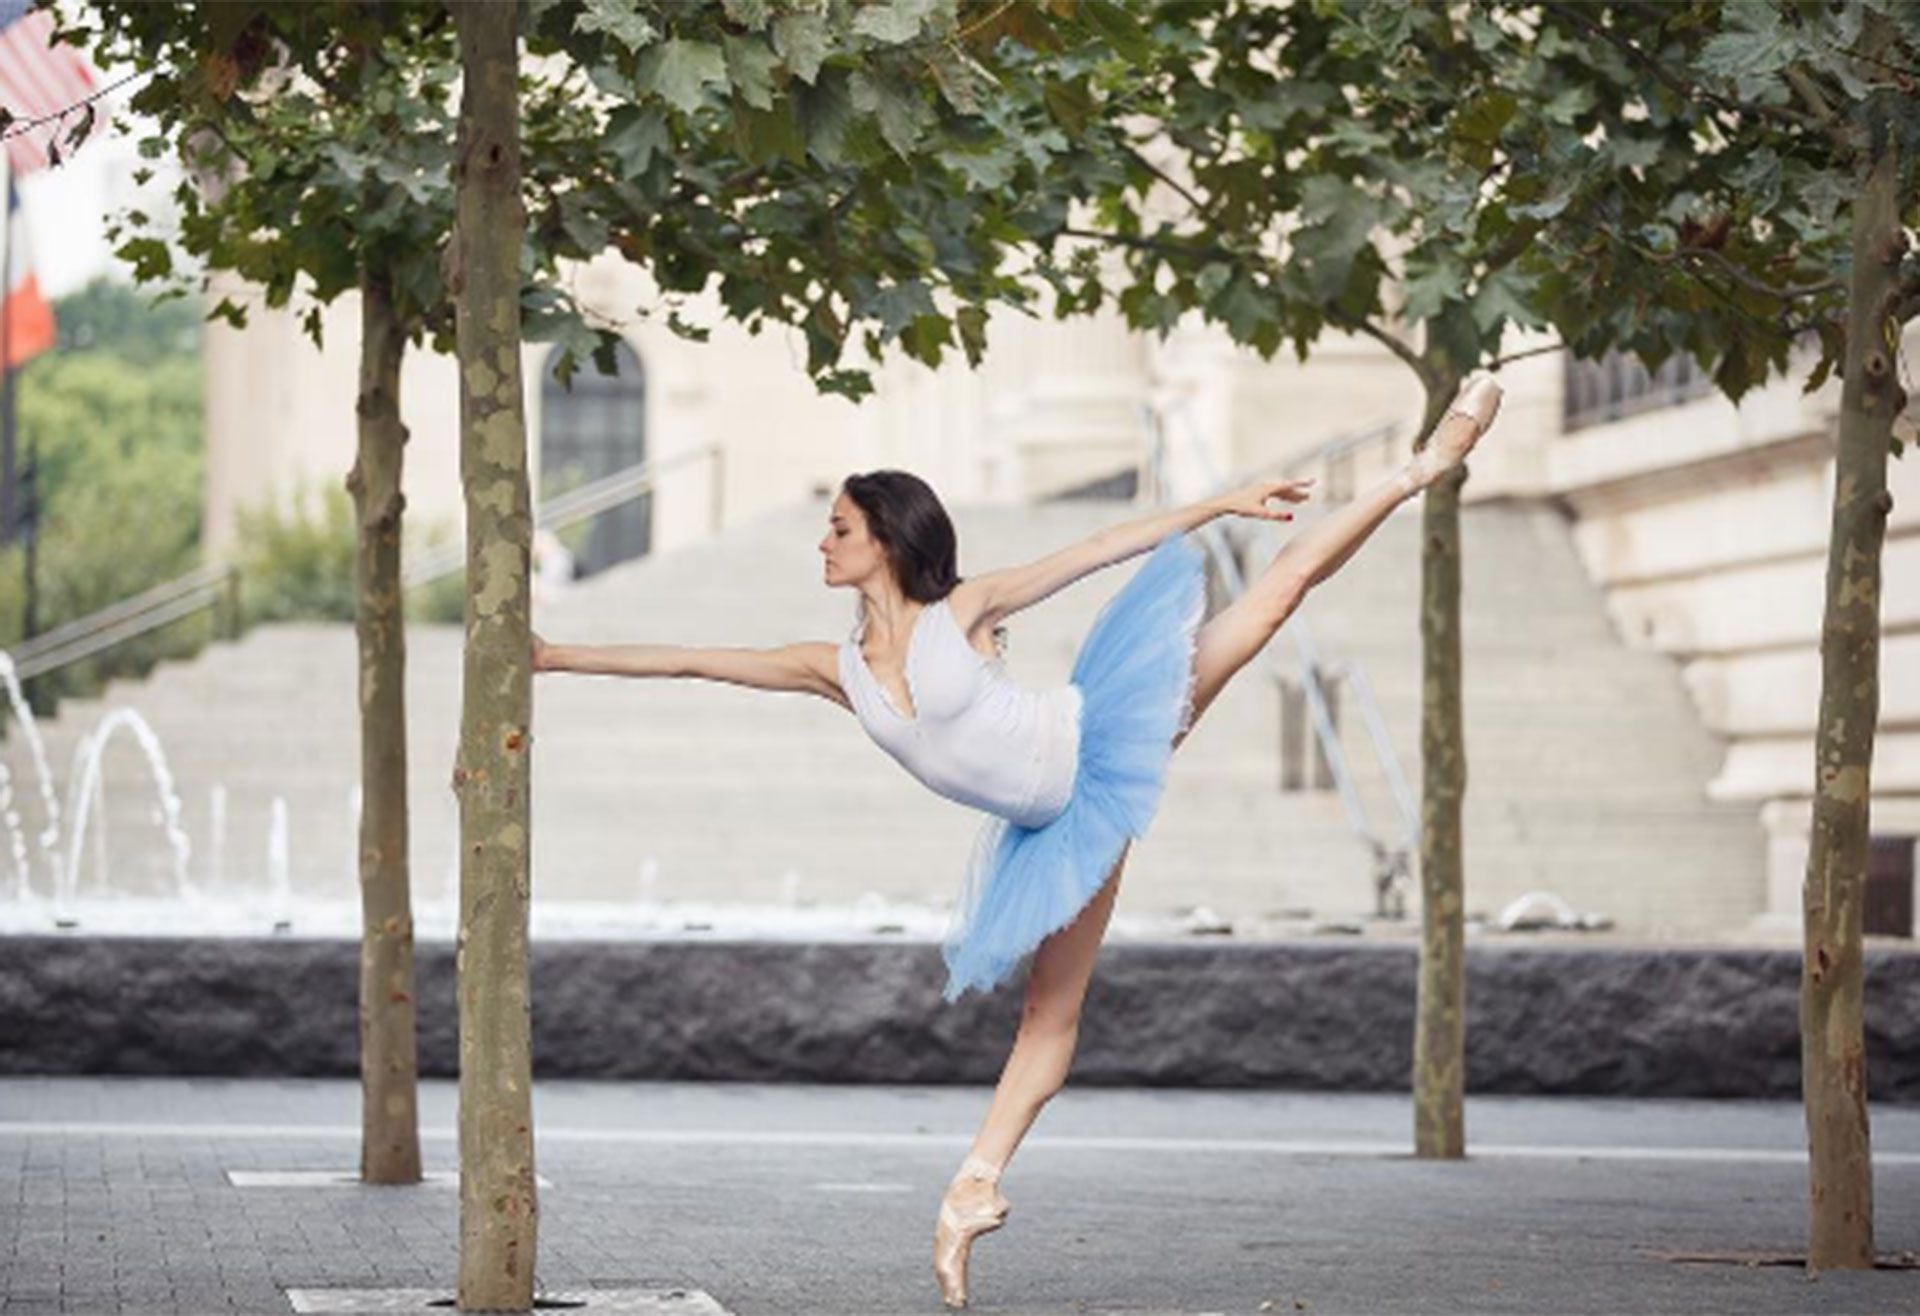 En 2019, Hamrick anunció su retiro del American Ballet Theatre